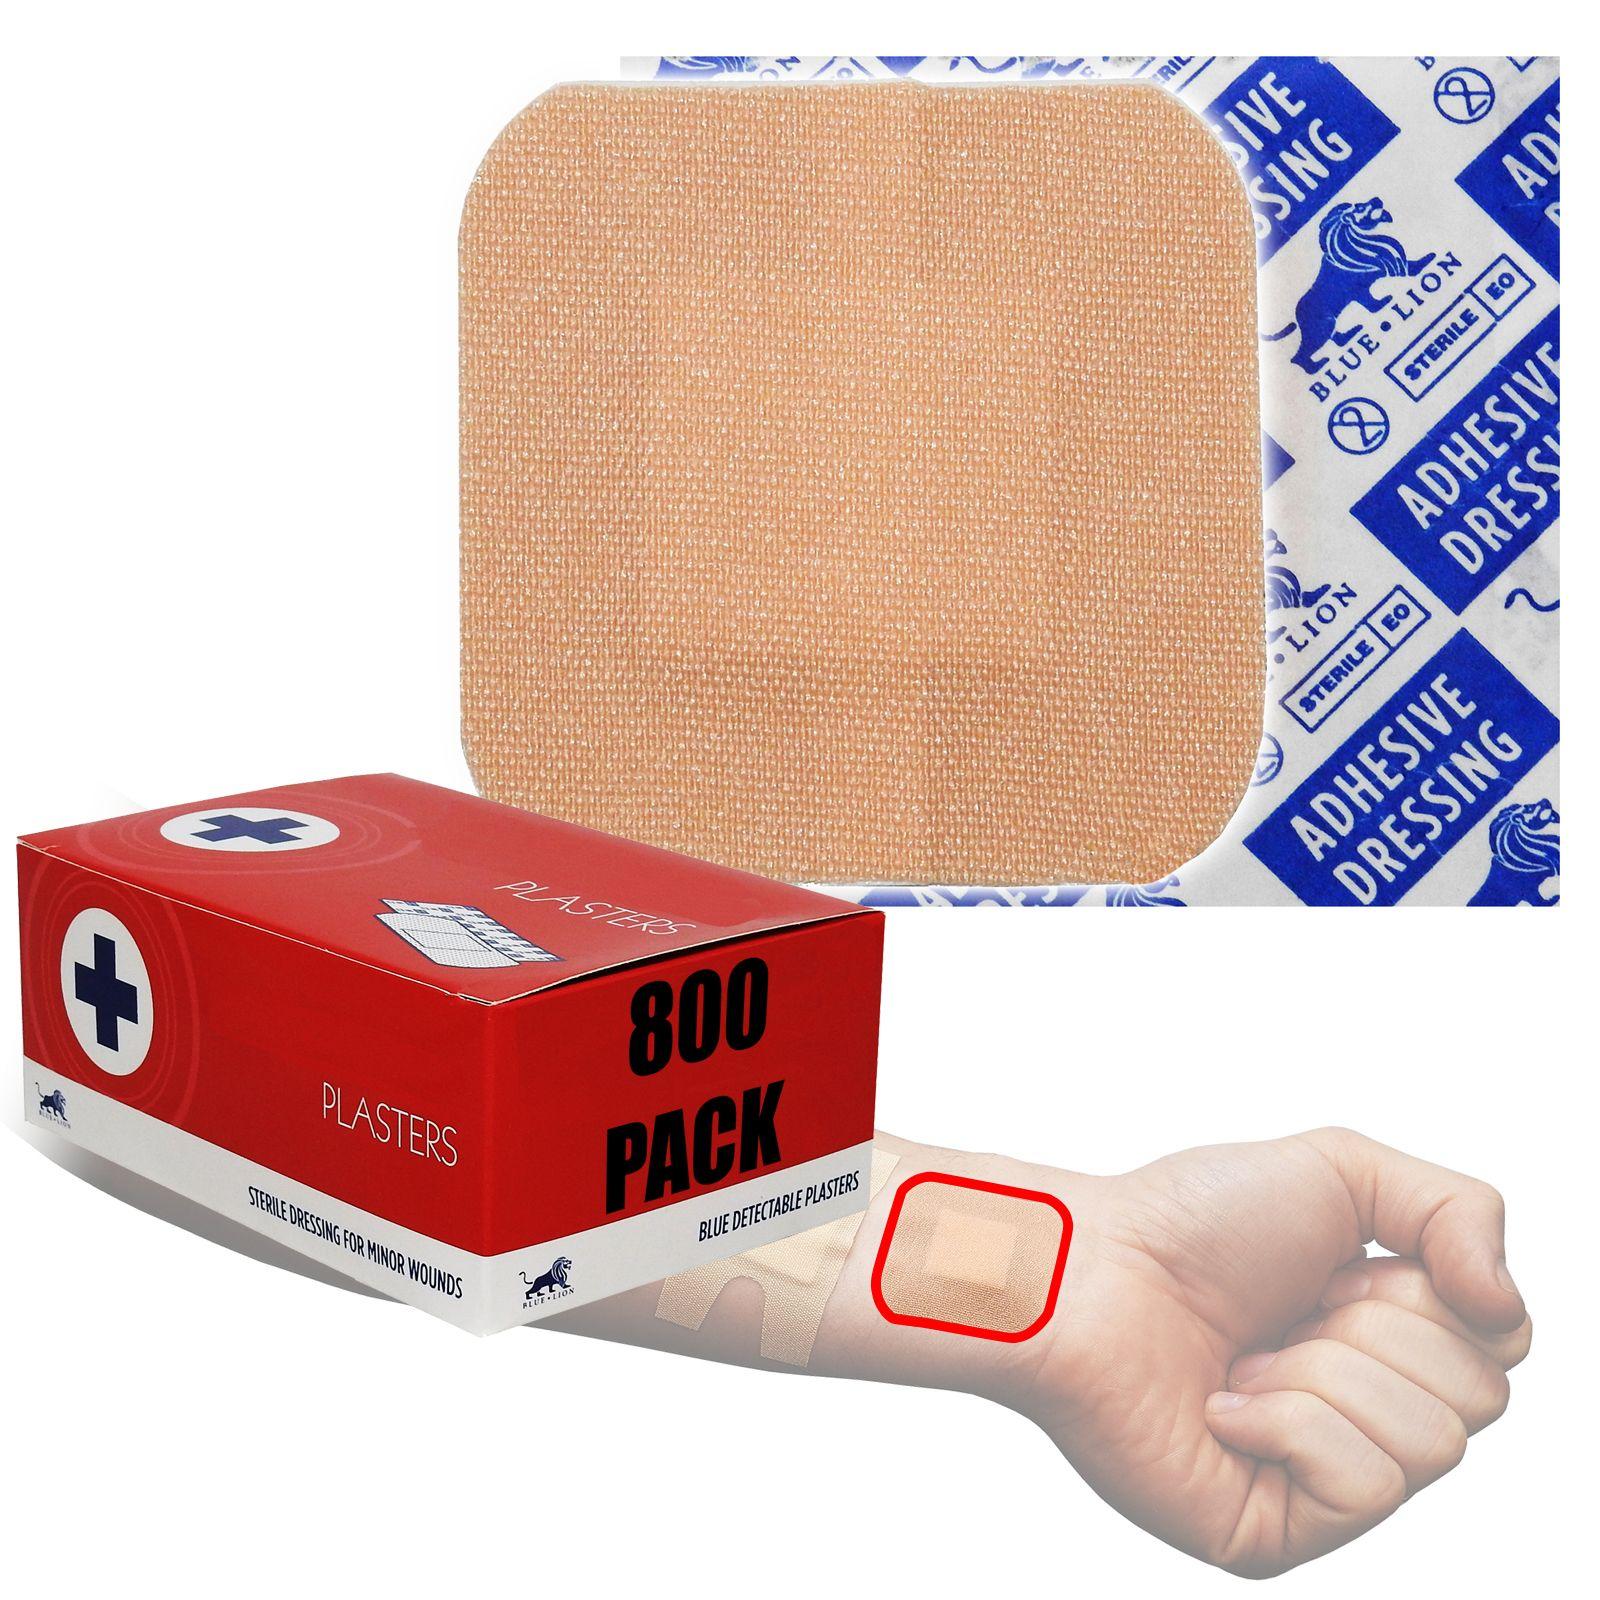 Square Blue Lion Logo - Bundle Buy Pack, 800x Blue Lion 3.8cm Wound Injury First Aid CE